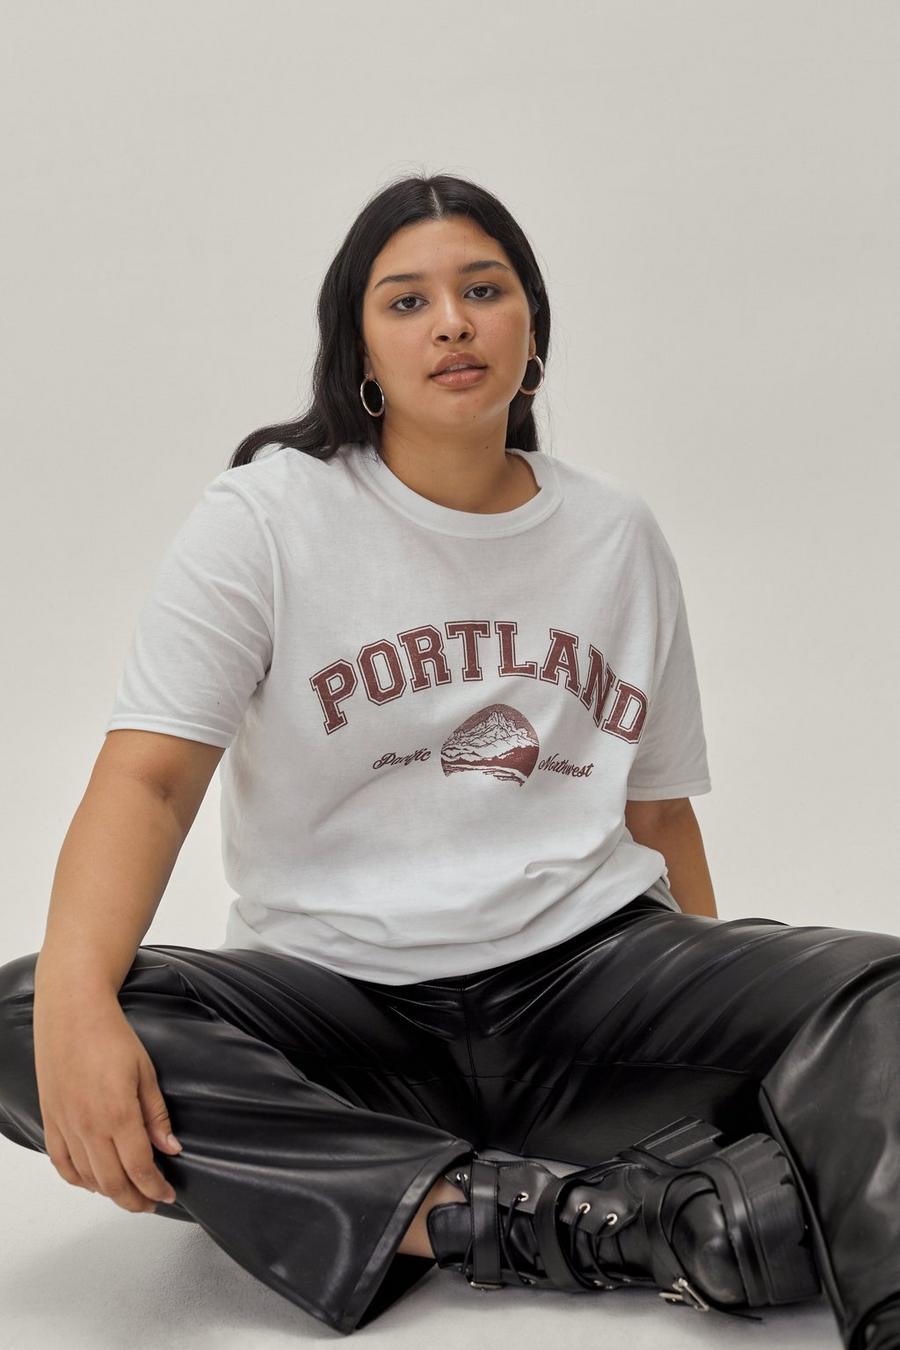 Plus Portland T-shirt